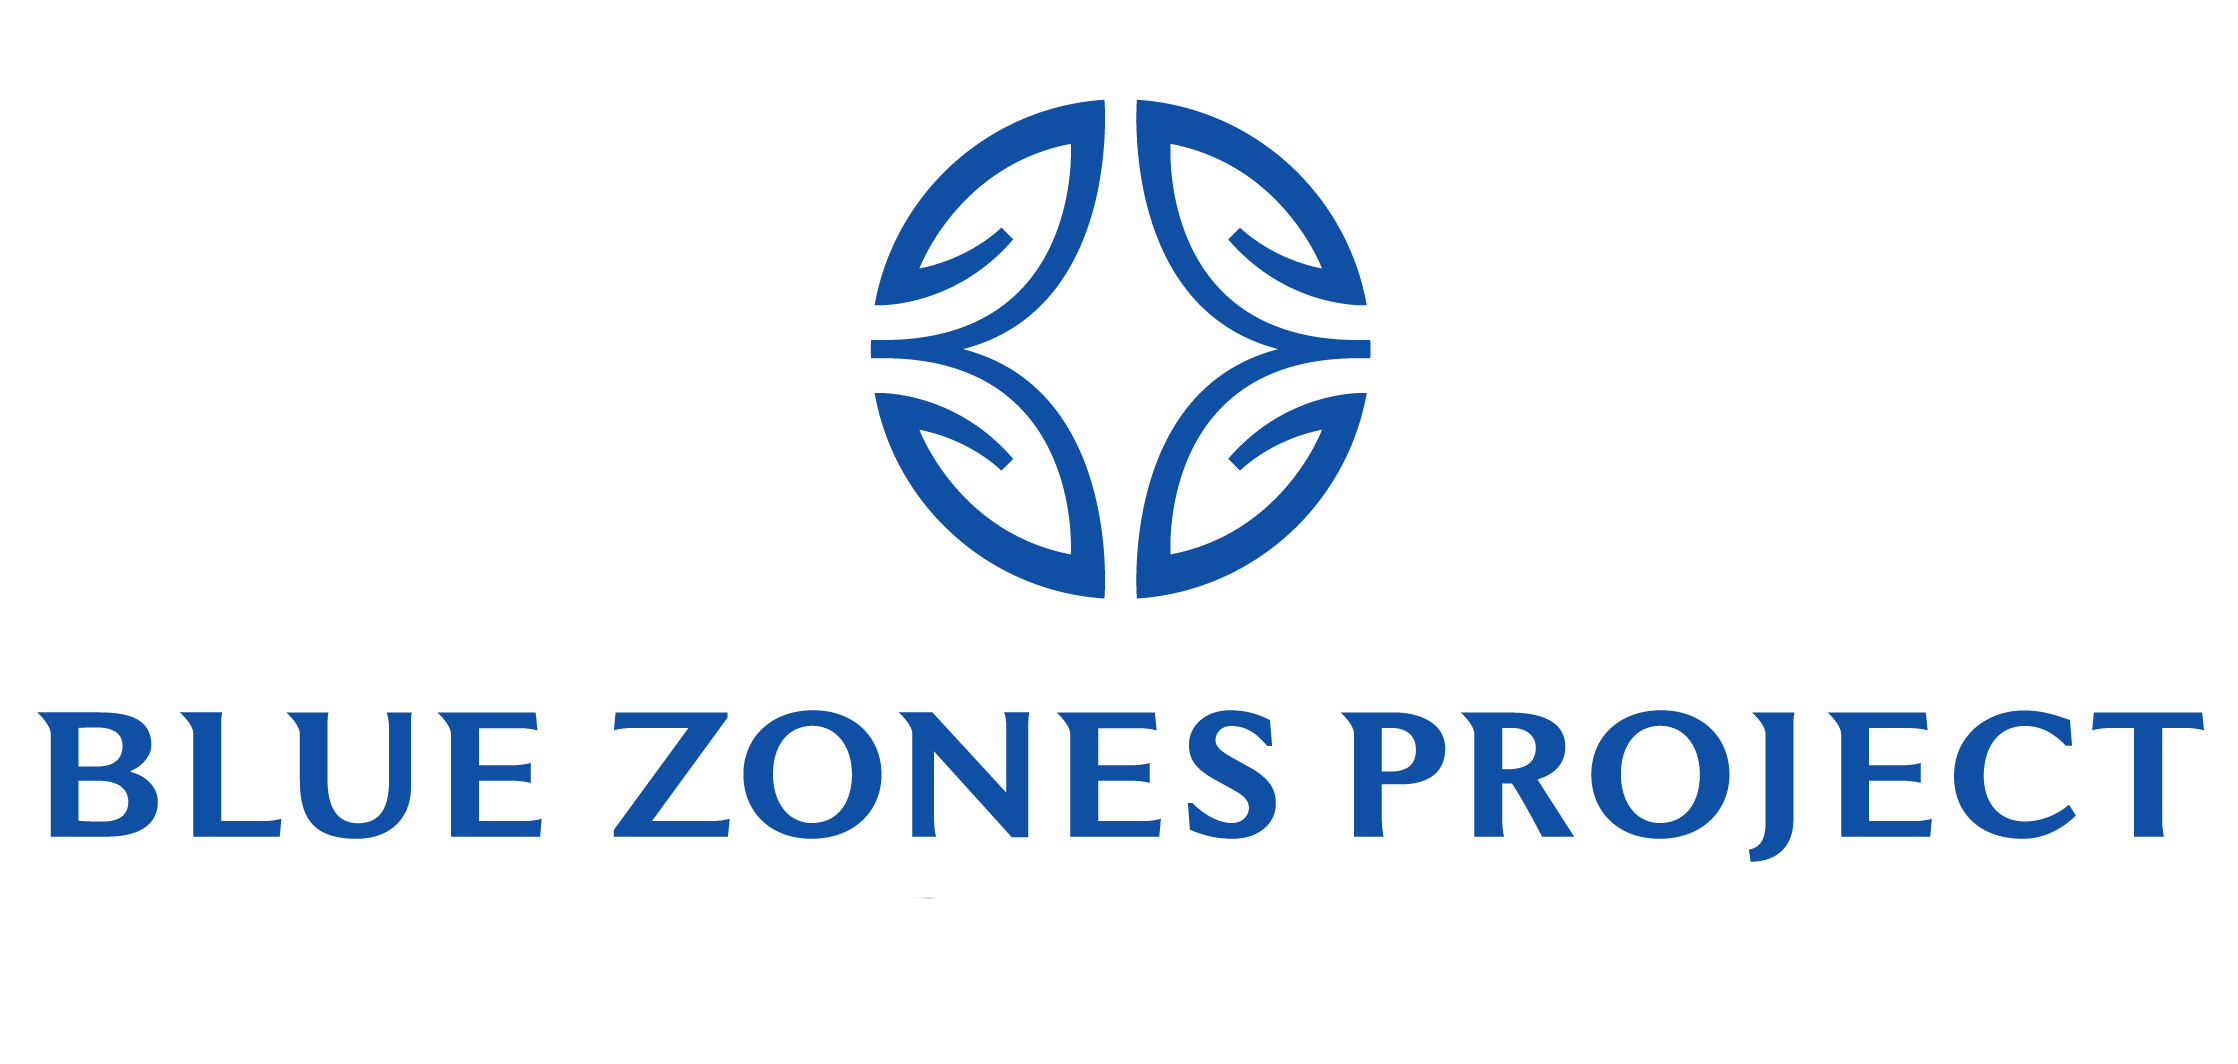 Blue Zones Project logo